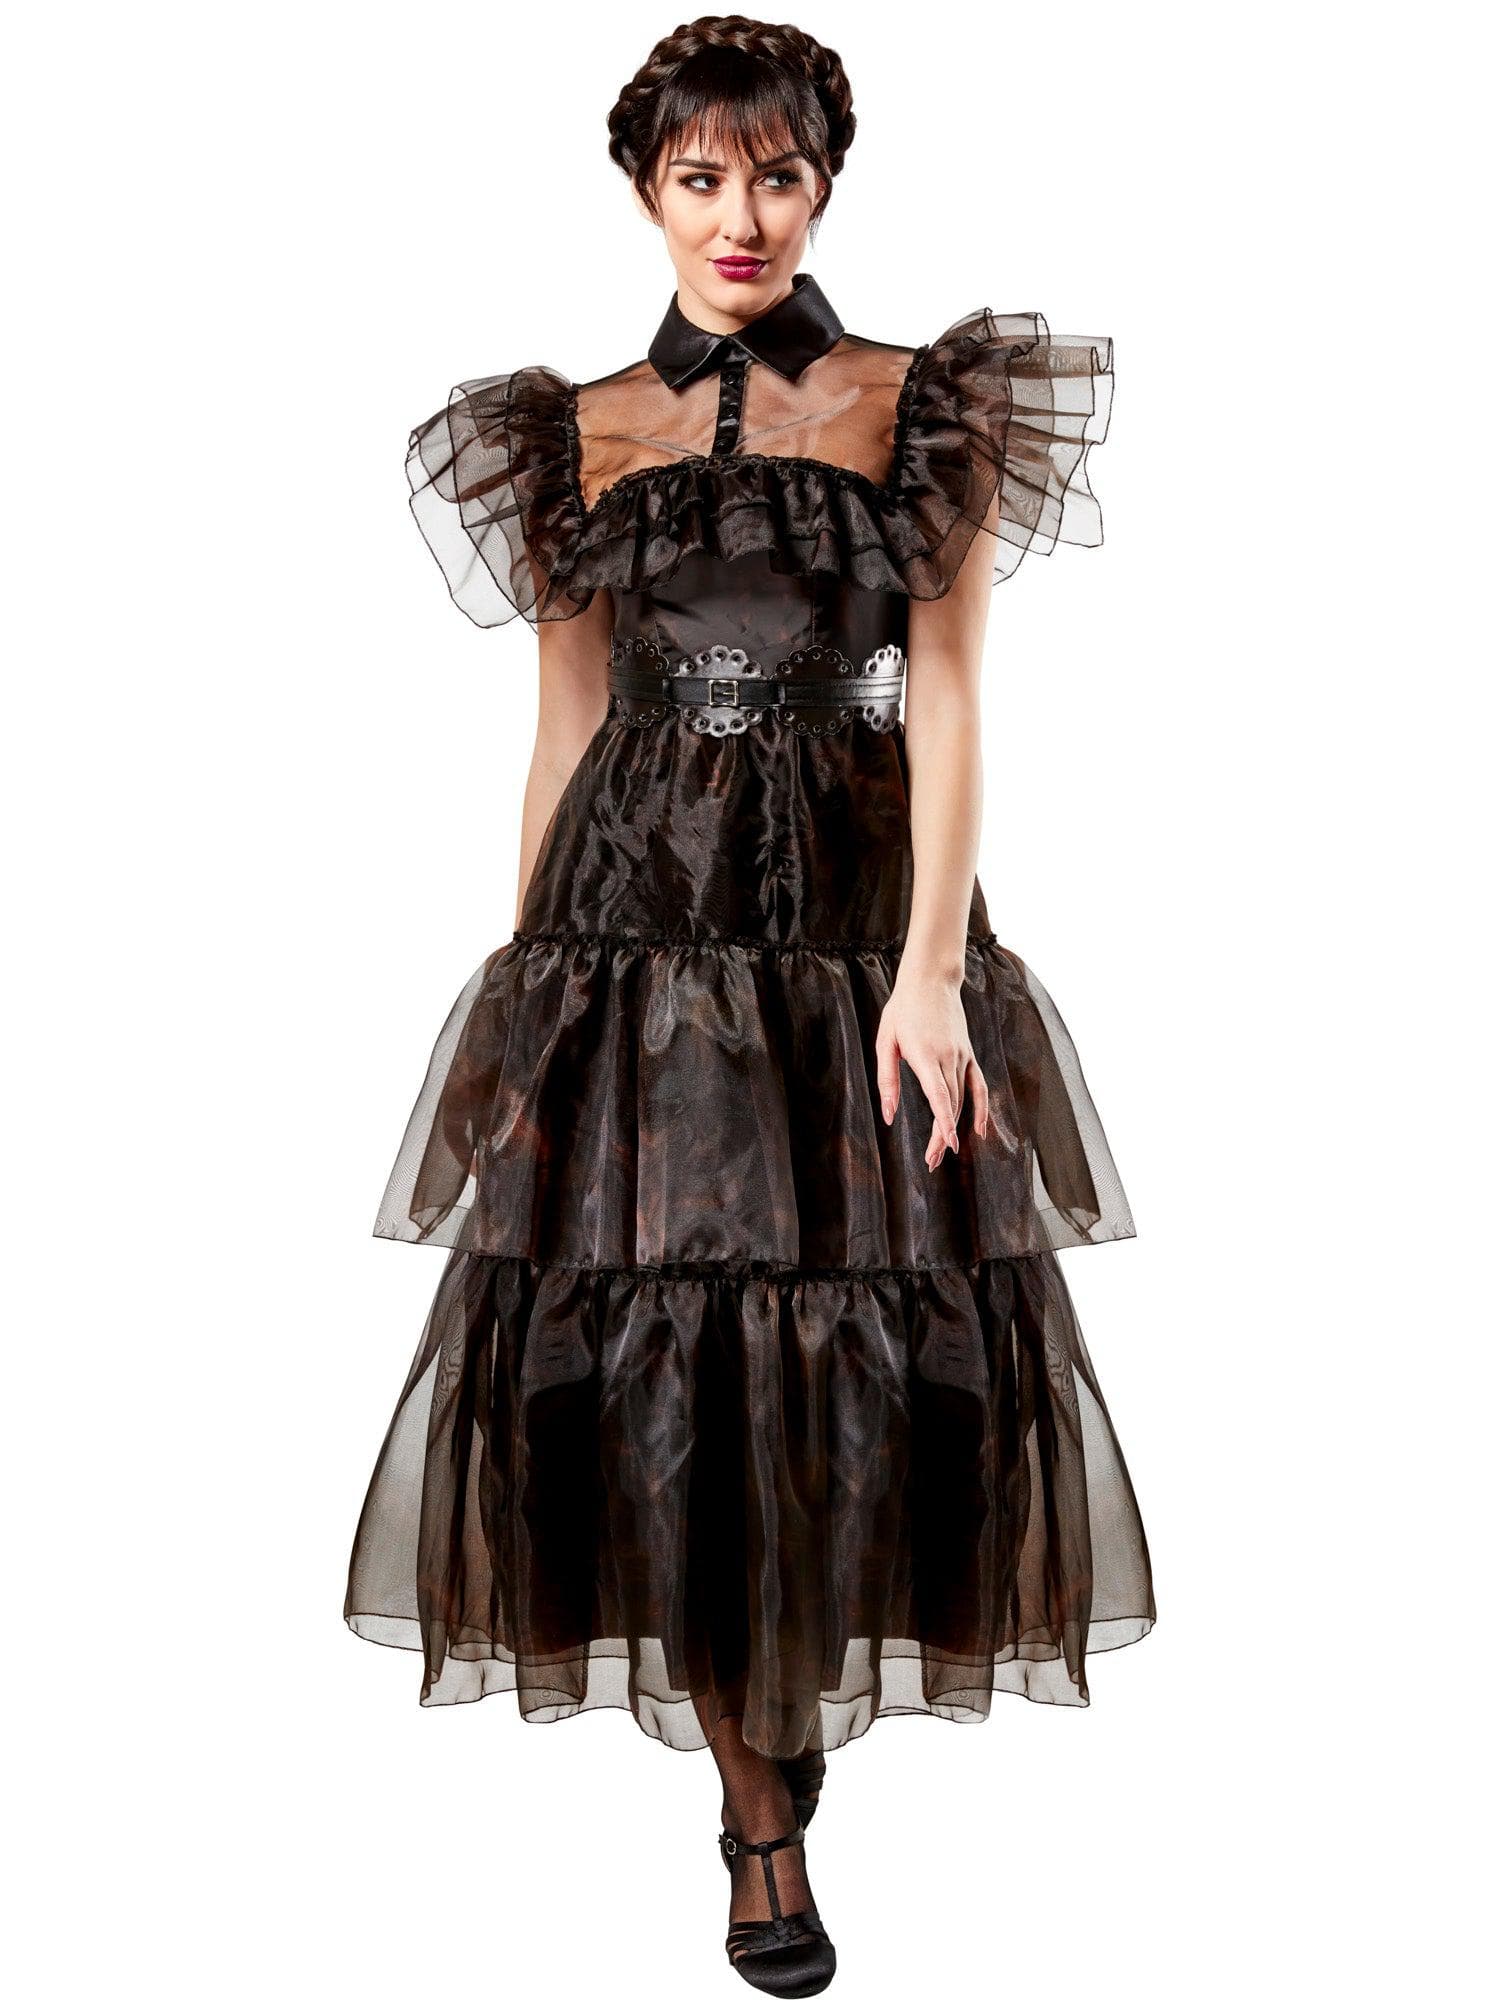 Kids Wednesday Addams Black Dance Dress with Belt Halloween Cosplay Costume